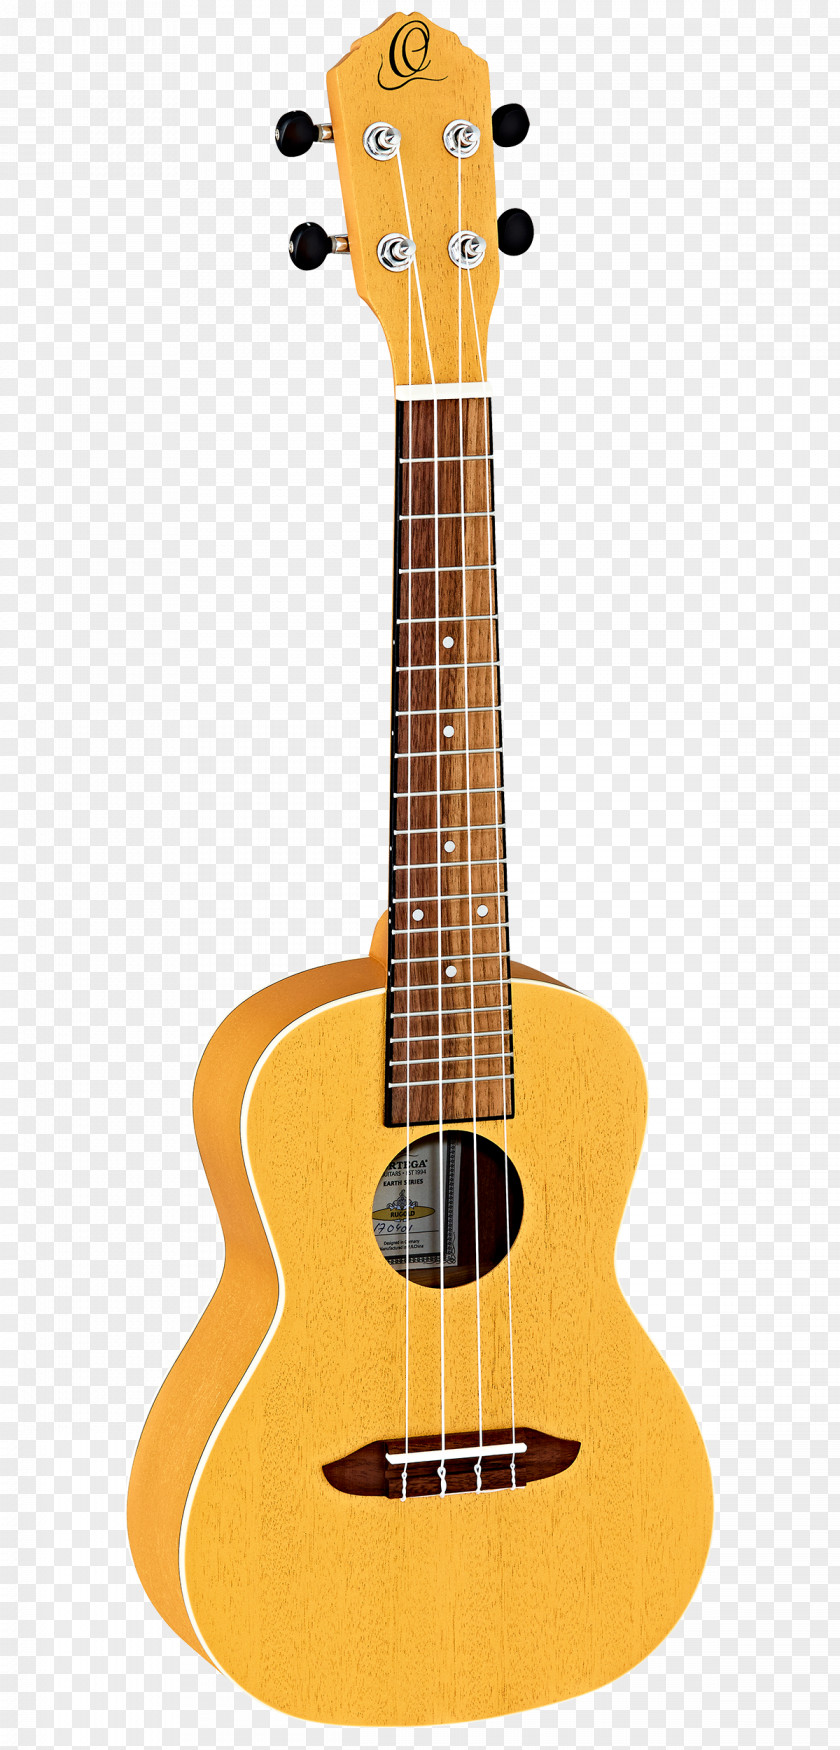 Amancio Ortega Ukulele Classical Guitar String Instruments Acoustic PNG